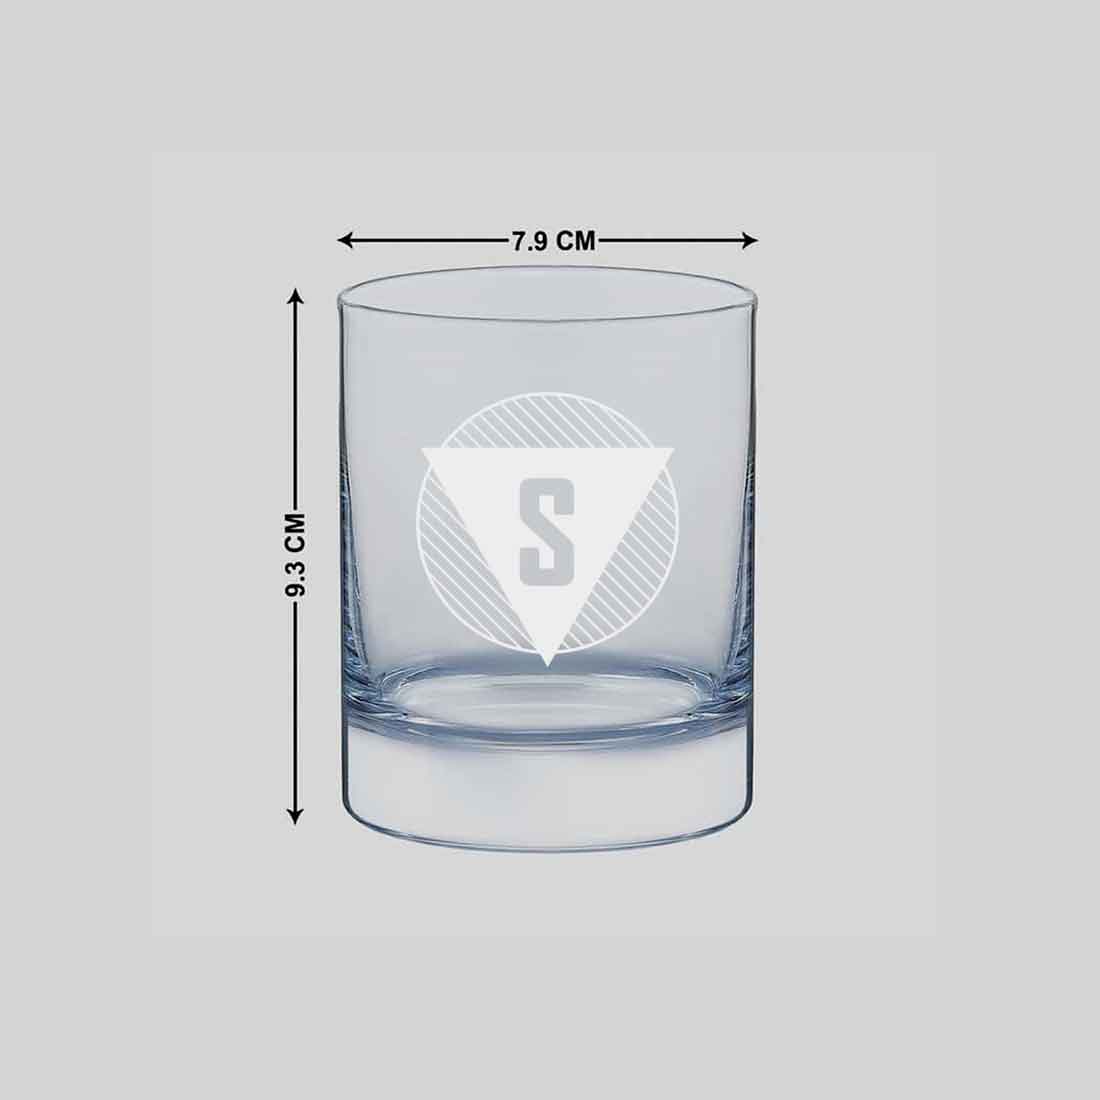 Pretty Personalized Whiskey Glass - Gift For Him Husband Boyfriend - Monogram Triangle